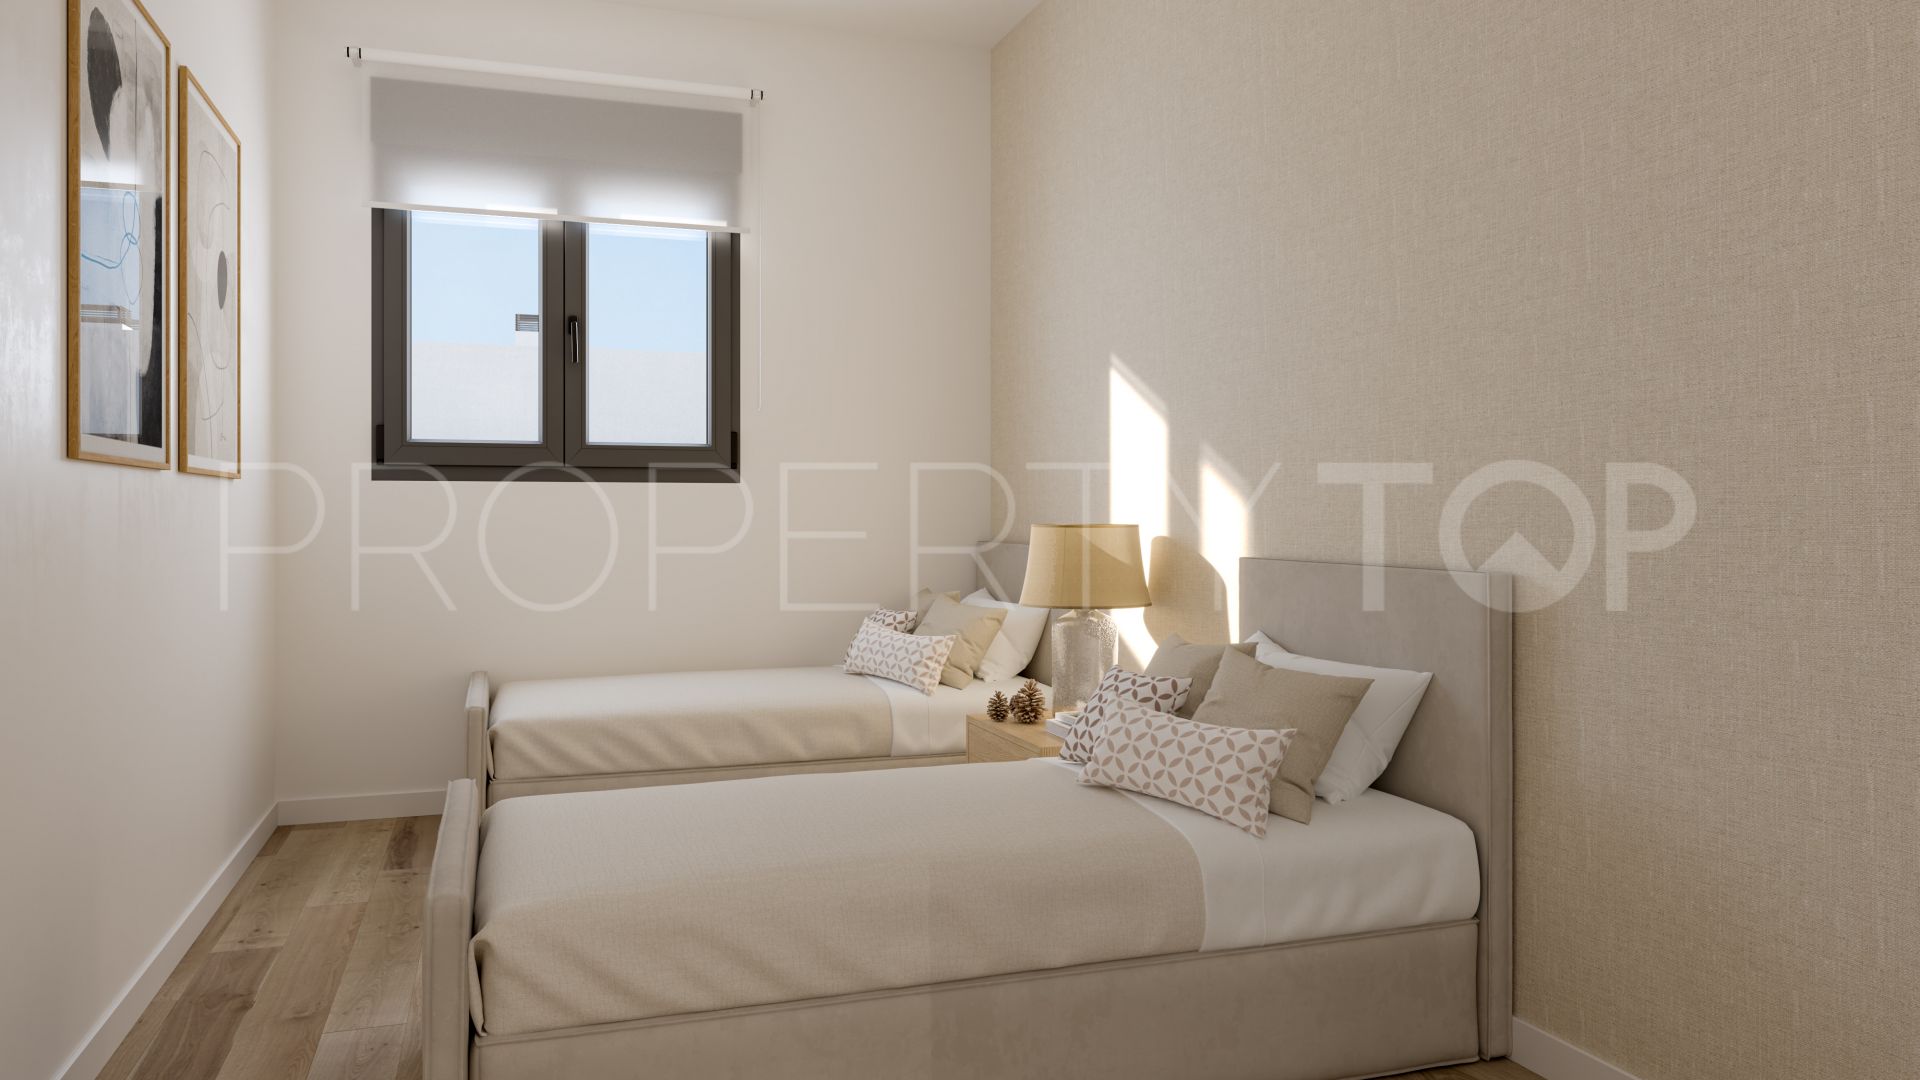 For sale apartment in Rincon de la Victoria with 3 bedrooms